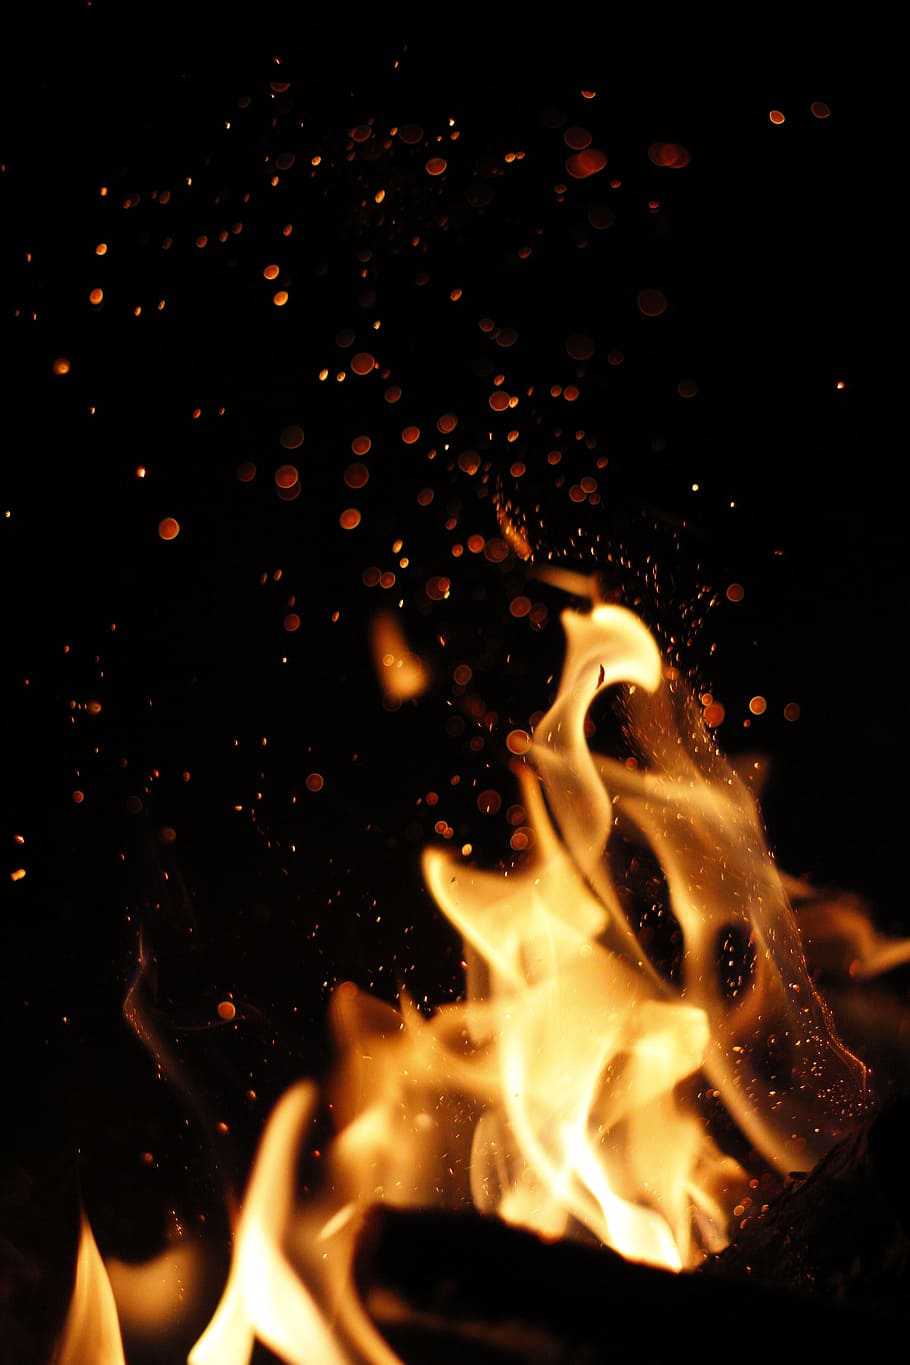 api, panas, kecepatan tinggi, api unggun, menyala, energi, kuning, hangat, ledakan, pembakaran